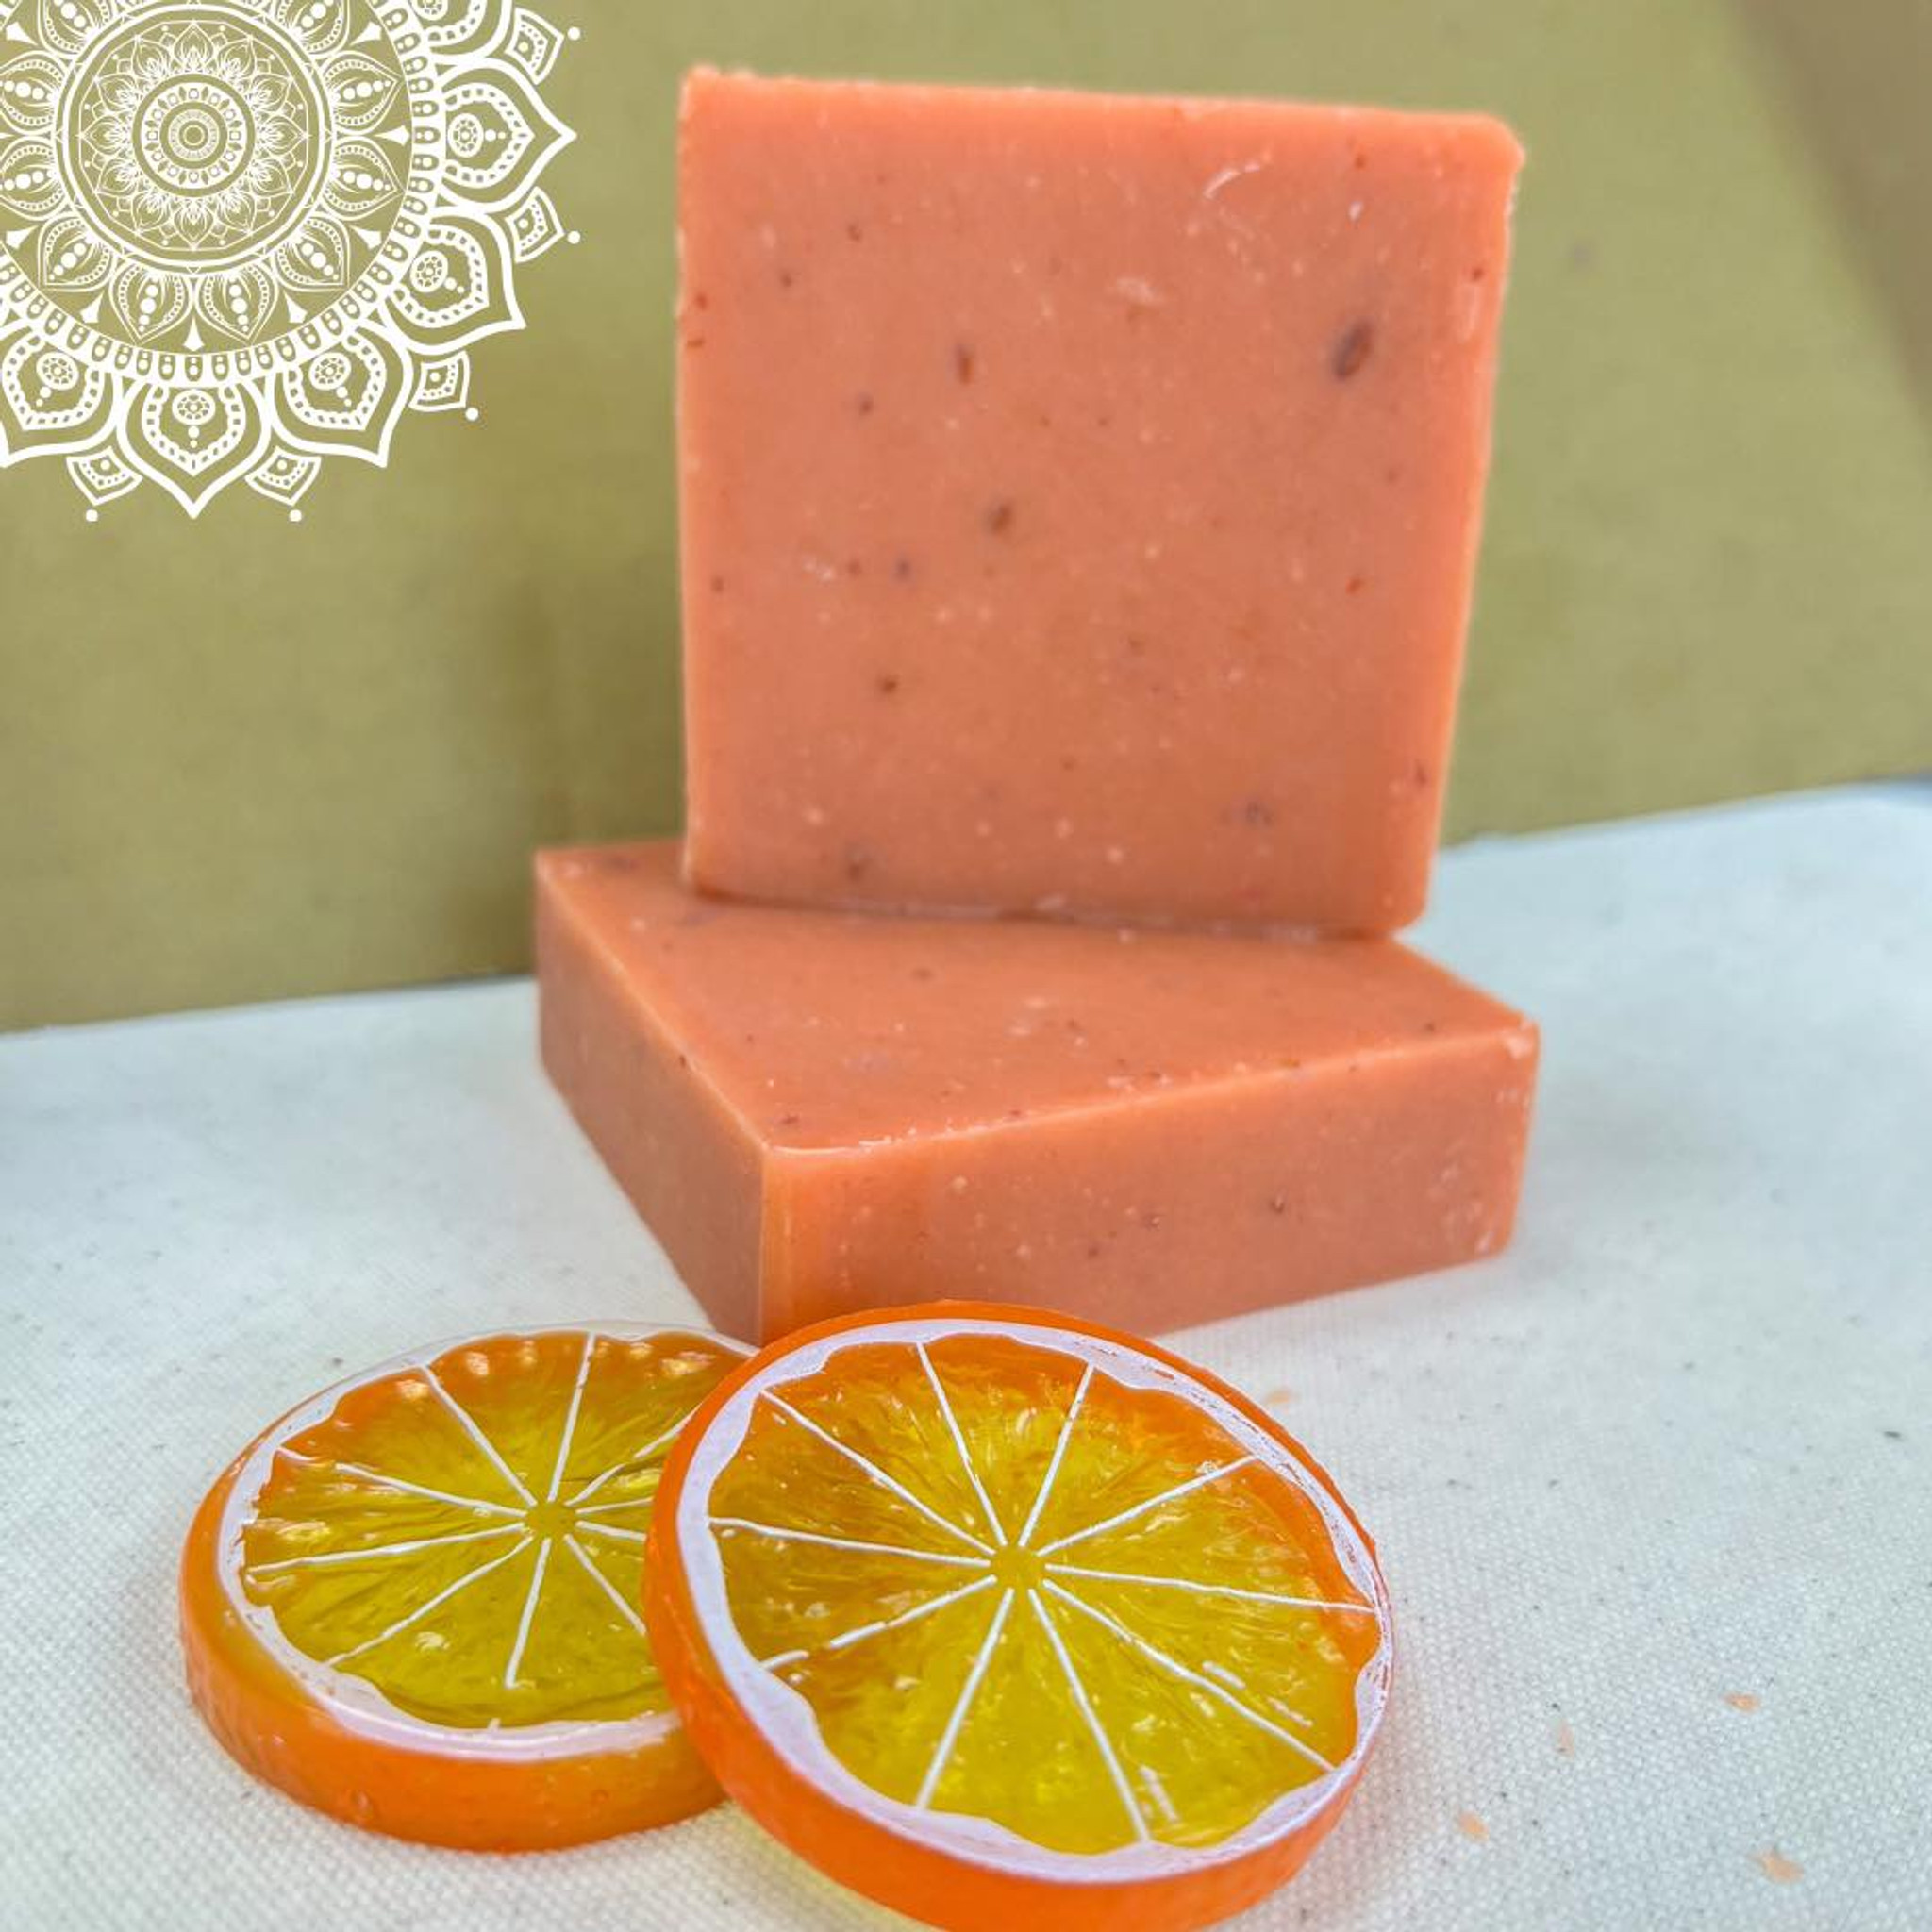 Natural Turmeric Soap Recipe - tints soap light pink-yellow to burnt oranger